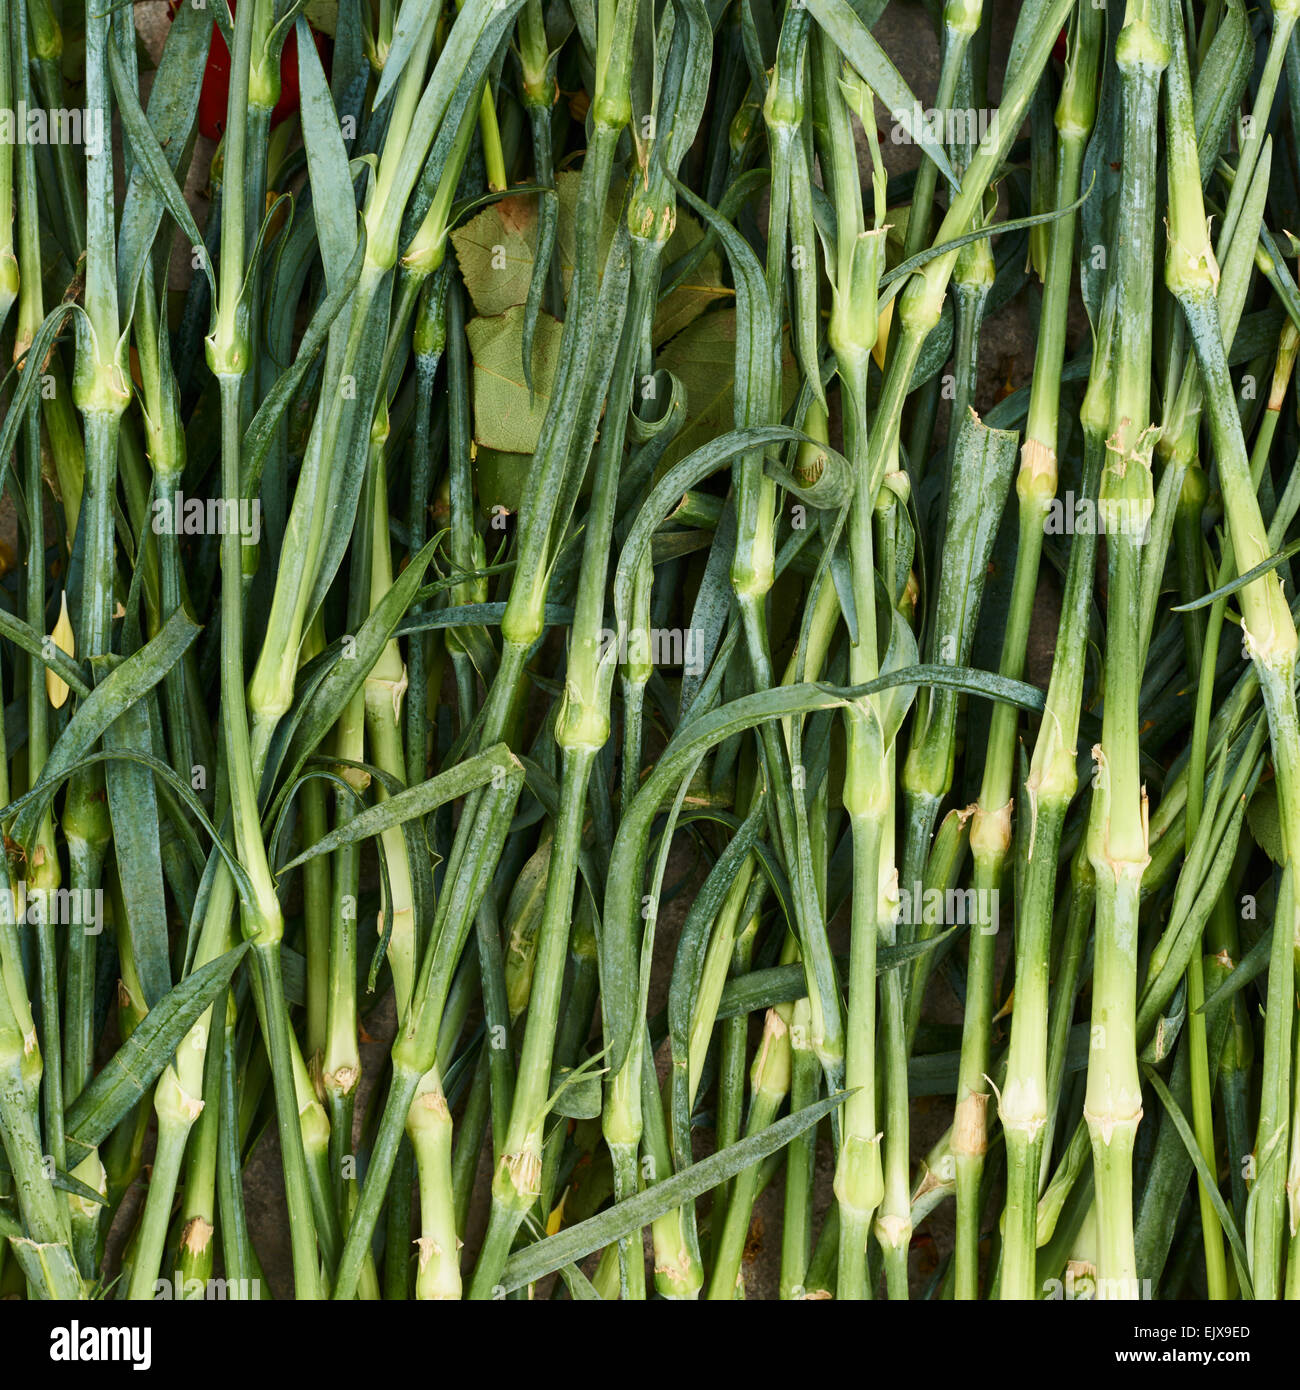 Dianthus flower's stems Stock Photo